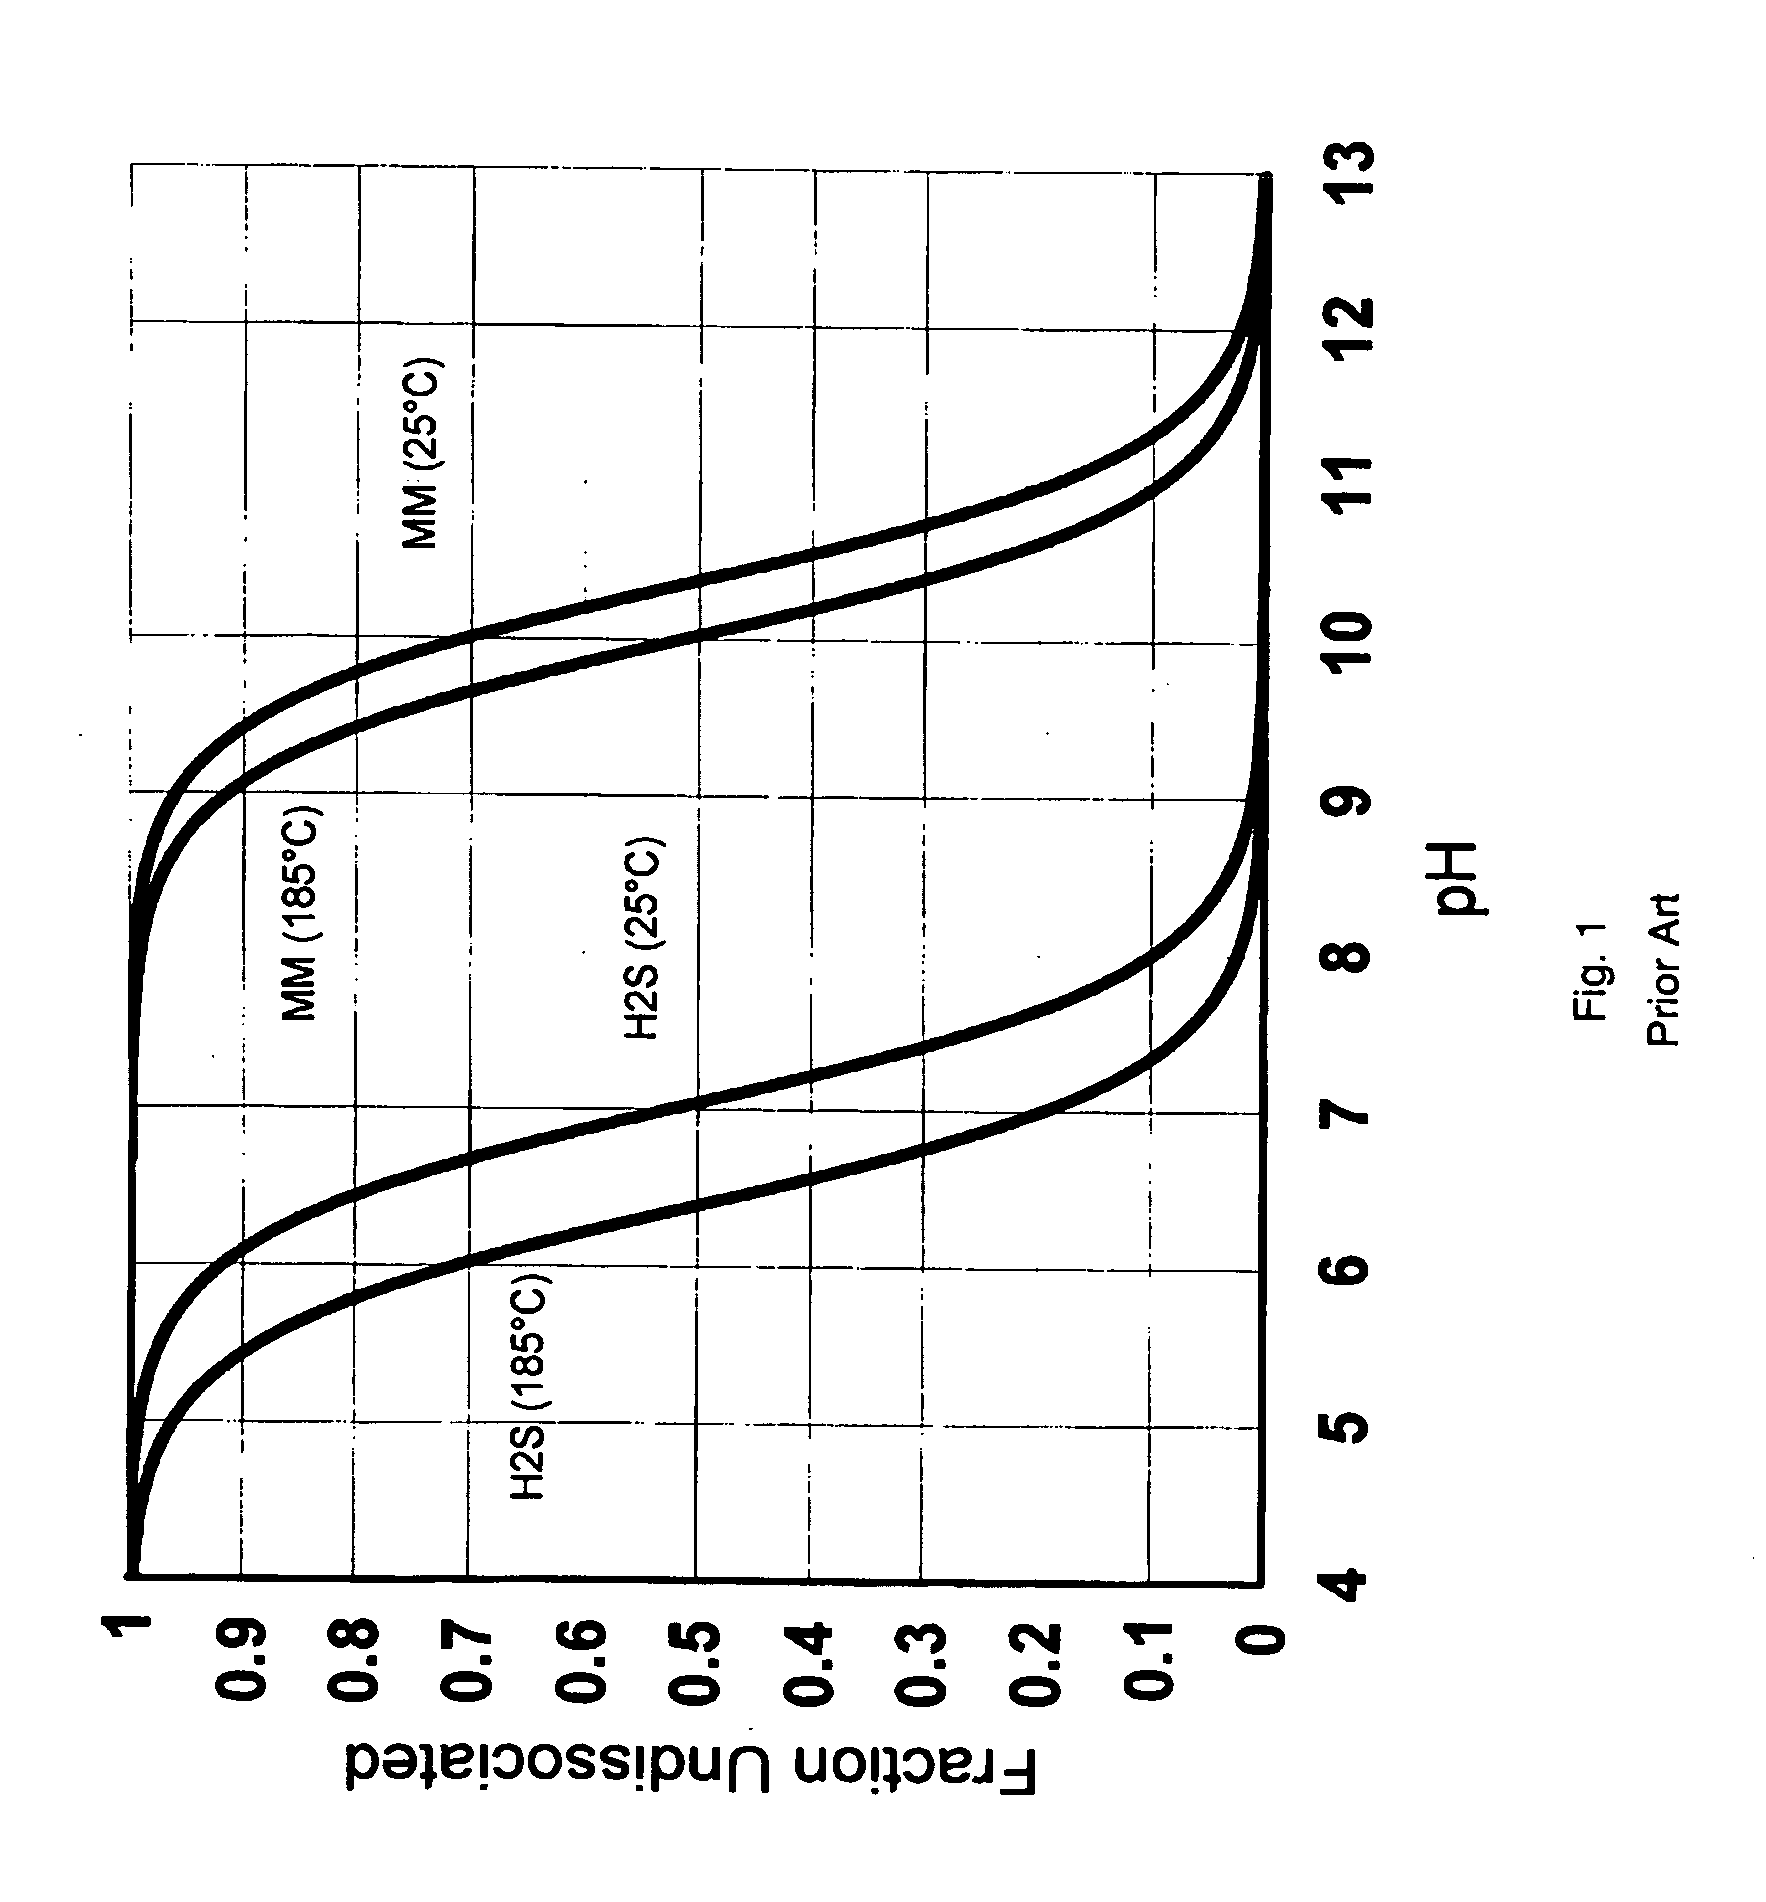 Methanol purification method and apparatus